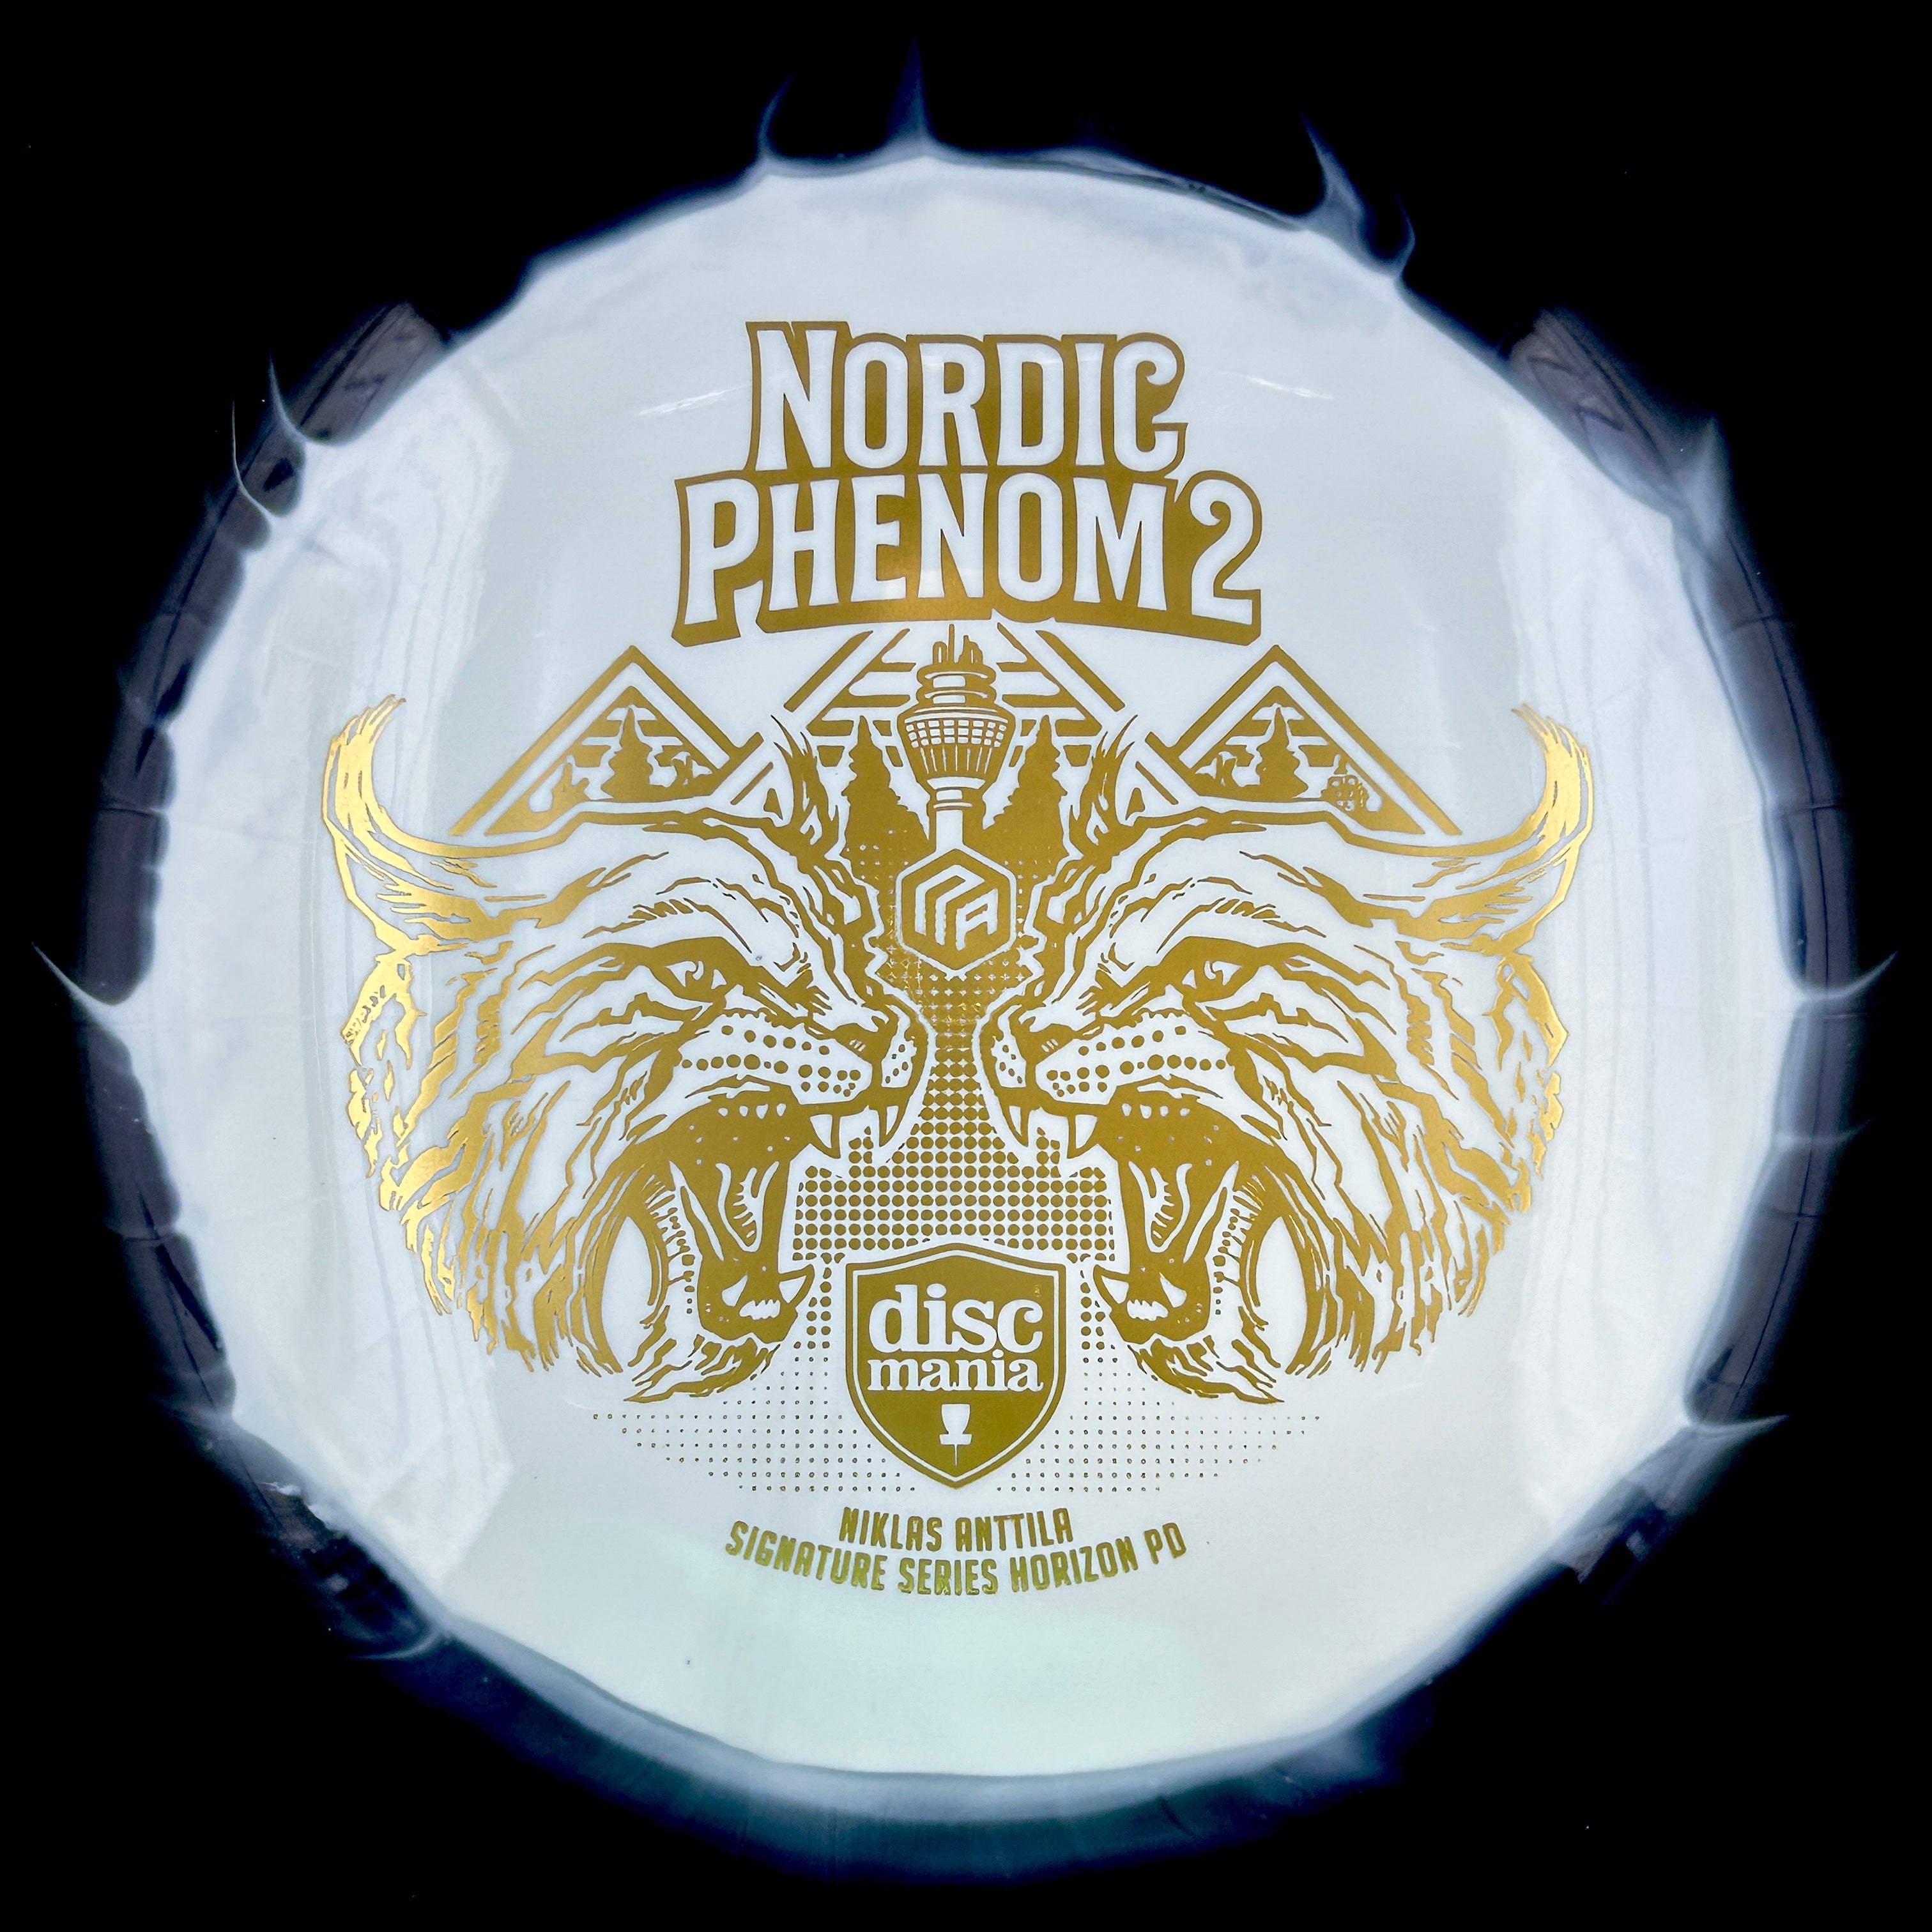 Discmania Horizon S-Line PD (Nordic Phenom 2 ) - Niklas Anttila Signature Series